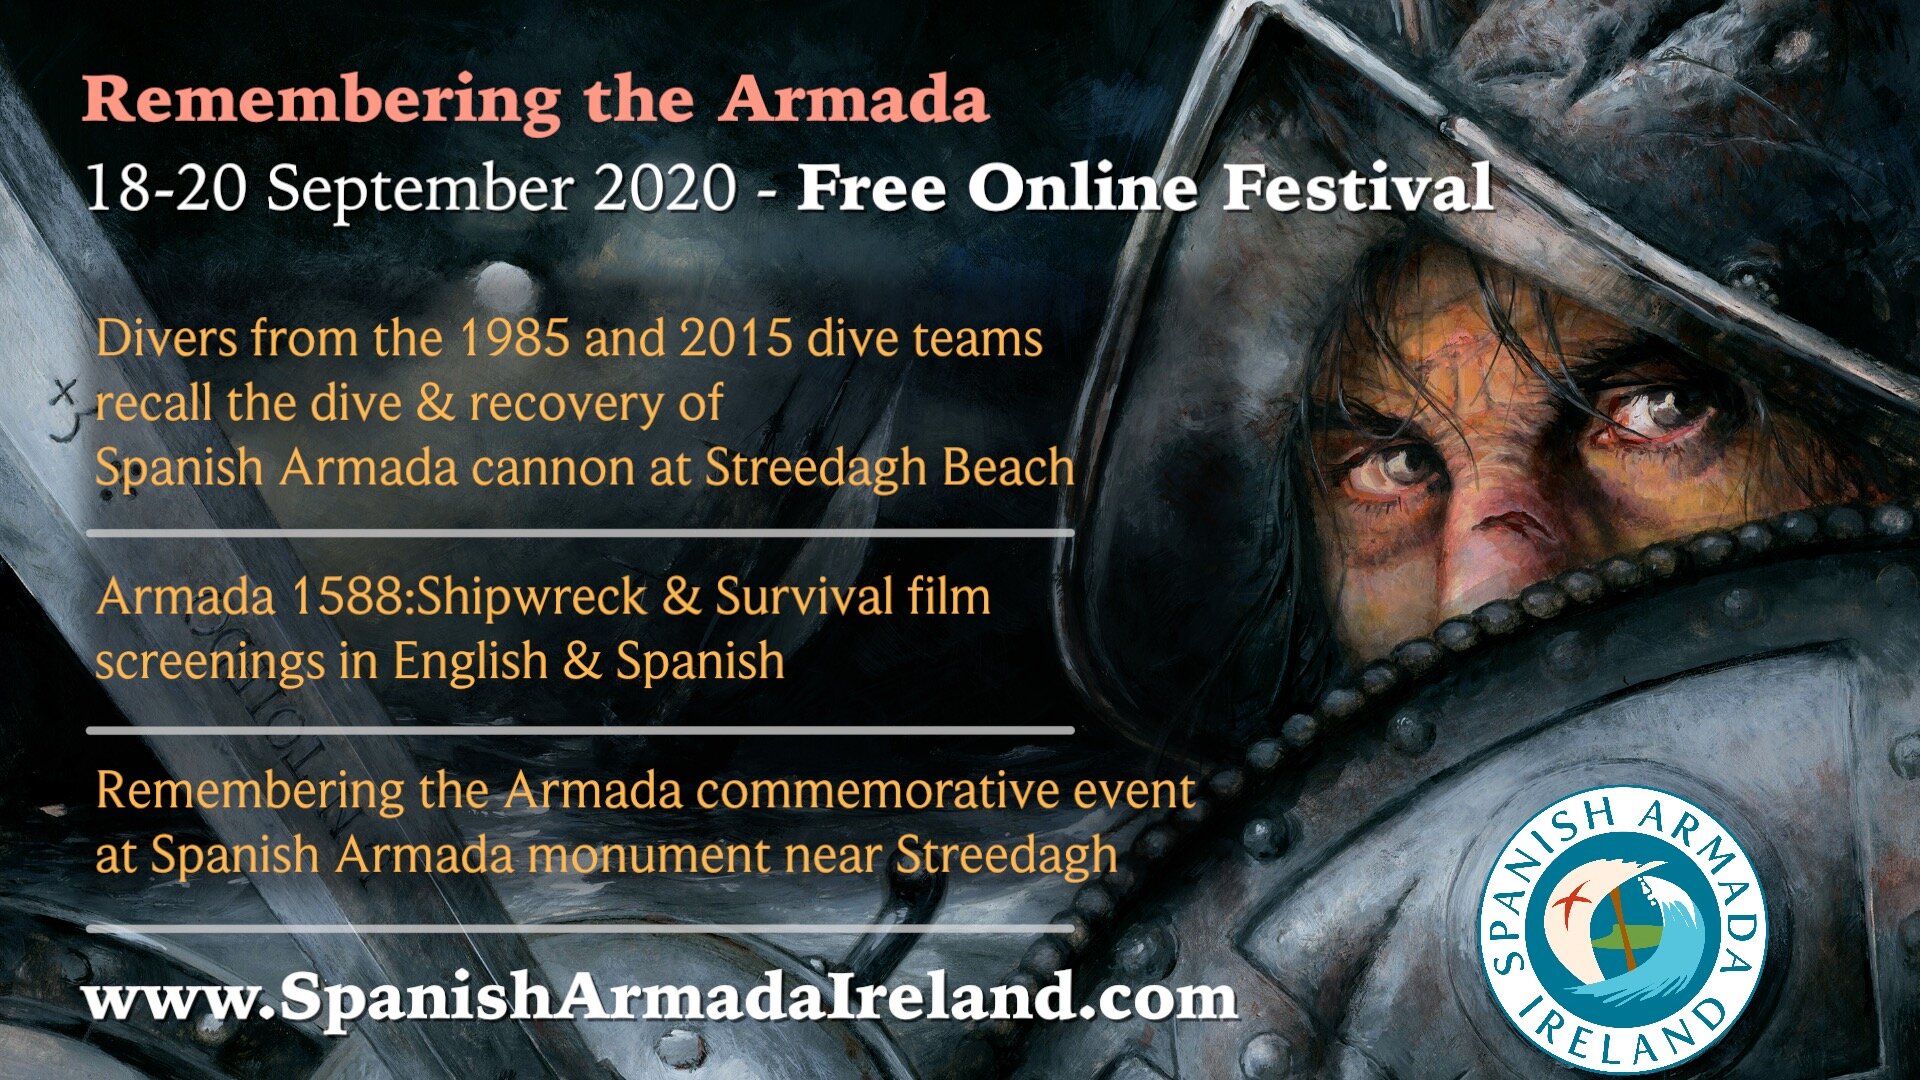 Remembering the Armada 2020 promo image 3.jpg